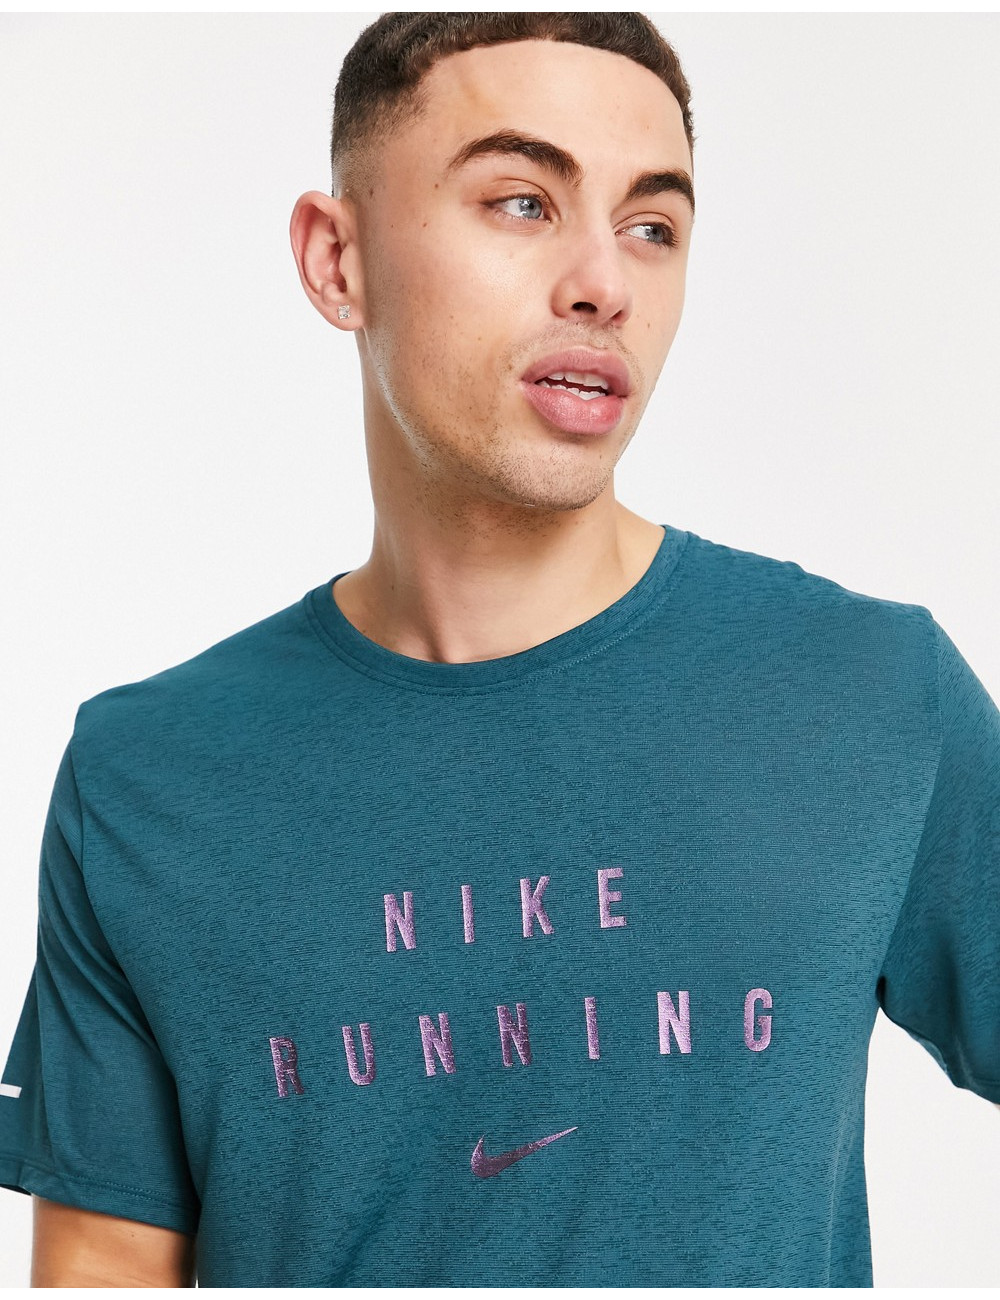 Nike Running Run Division...